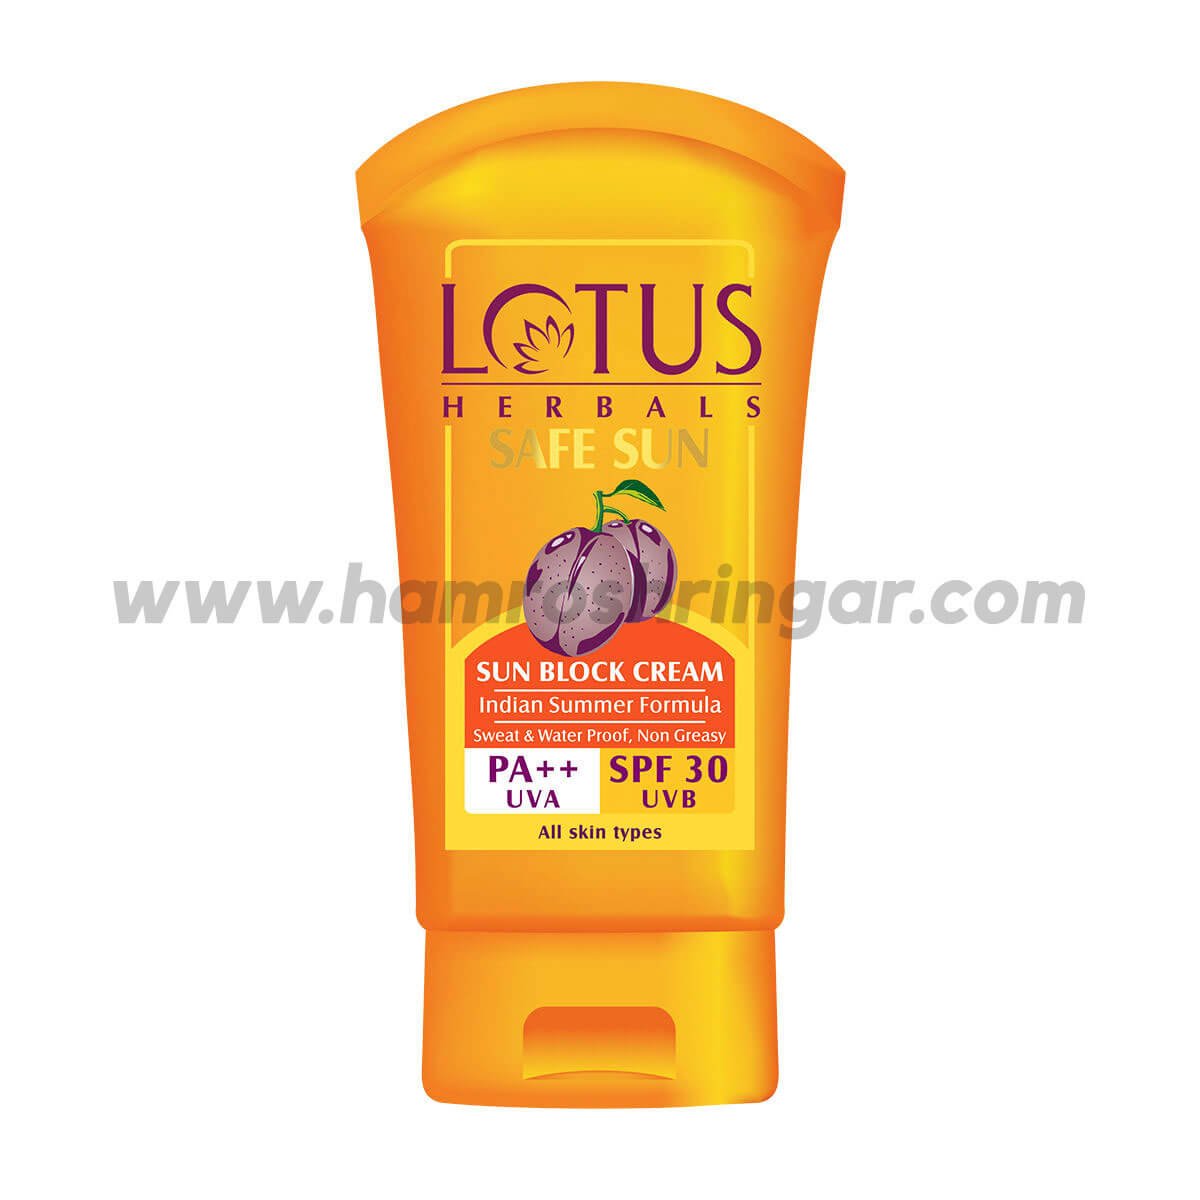 Lotus Herbals Safe Sun Sun Block Cream PA++ SPF 30 - 50 gm - Online  Shopping in Nepal | Shringar Store | Shringar Shop | Cosmetics Store |  Cosmetics Shop | Online Store in Nepal